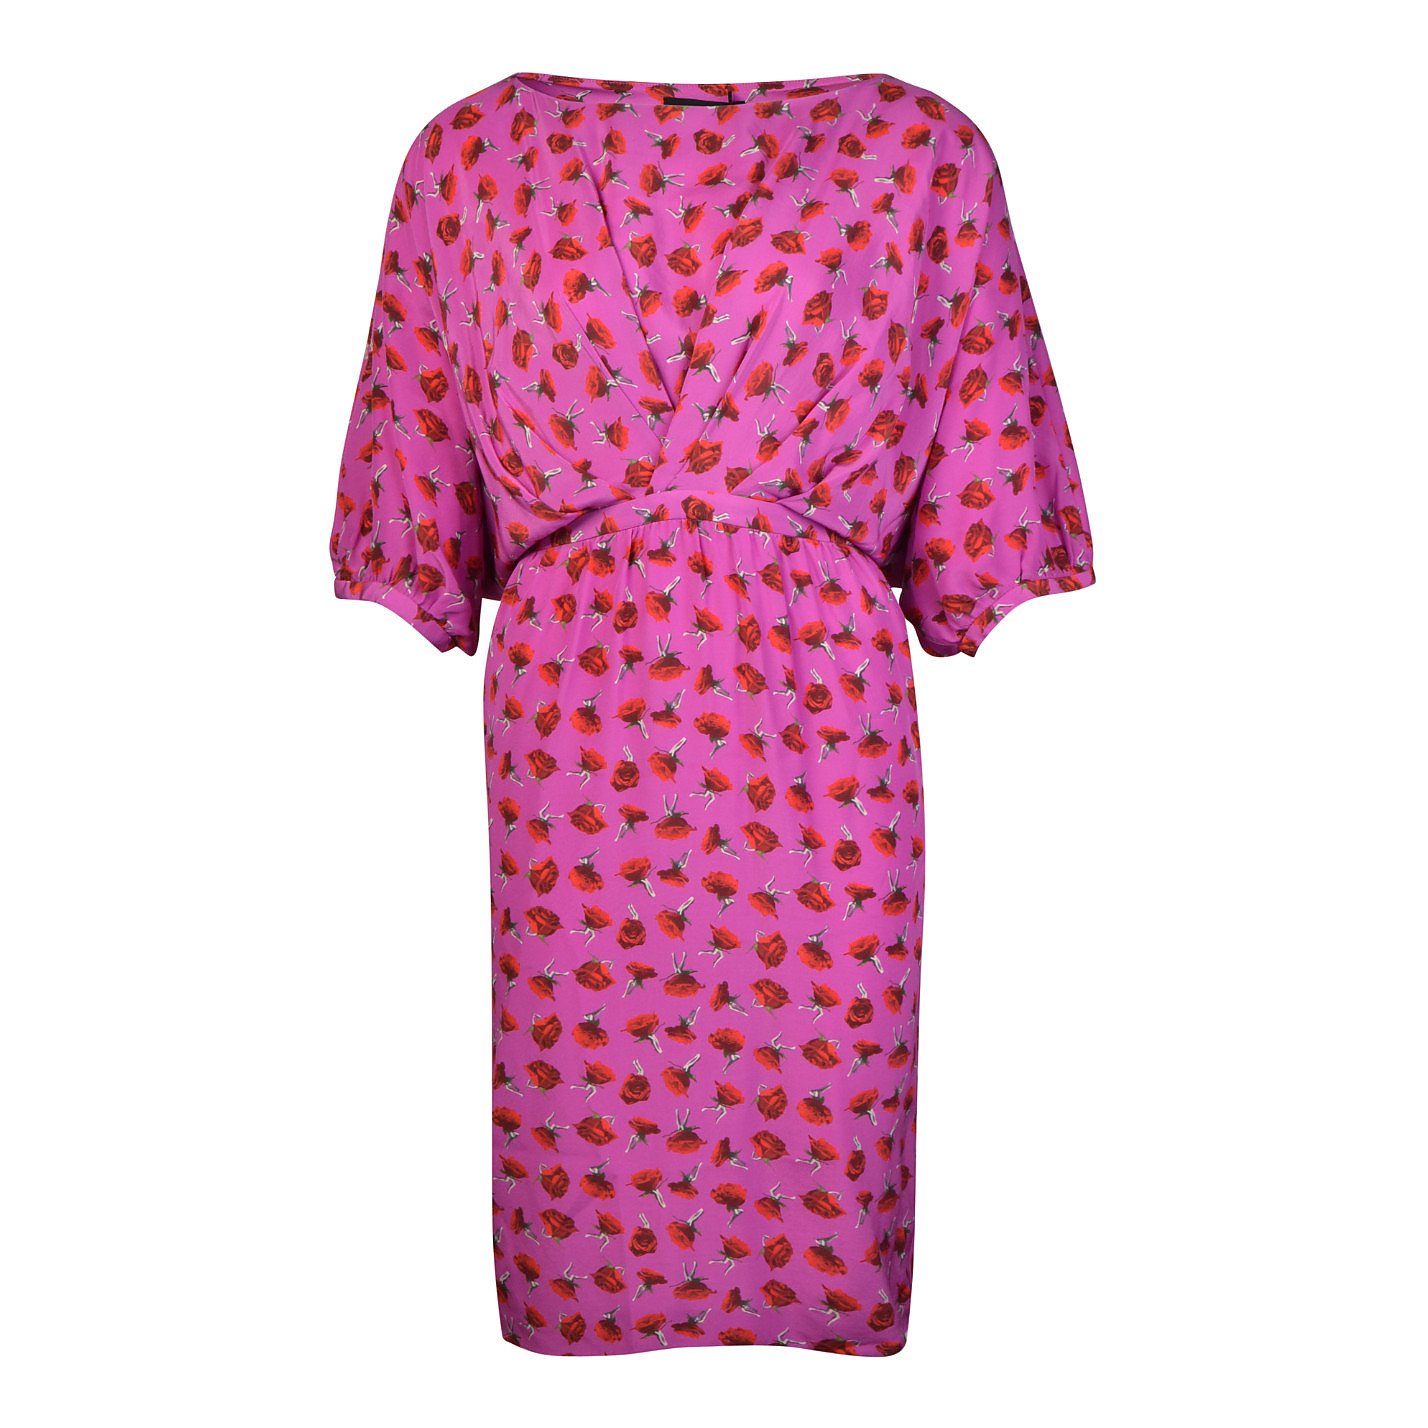 Thakoon Rose-Printed Sheer Dress